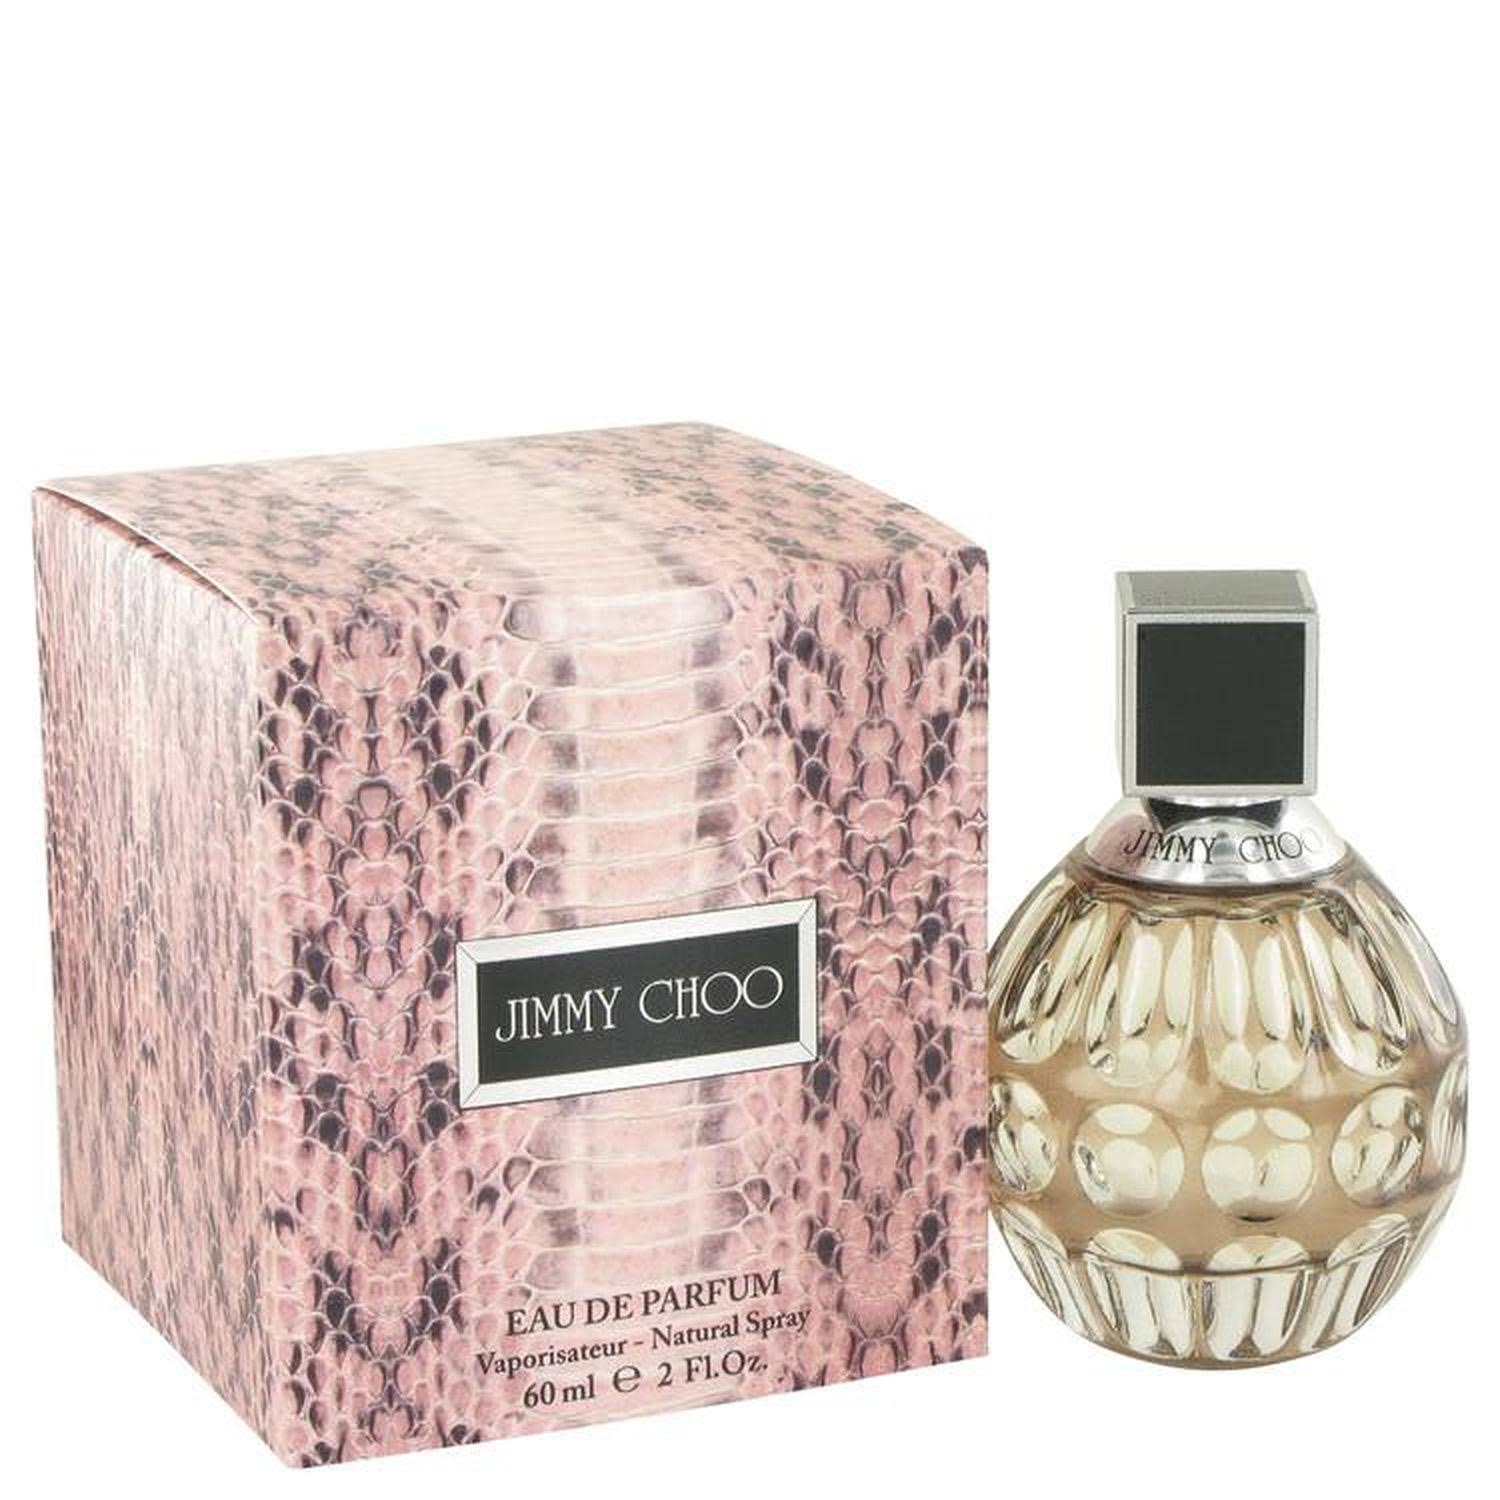 Jimmy Choo for Women Eau De Parfum Natural Spray - 60ml